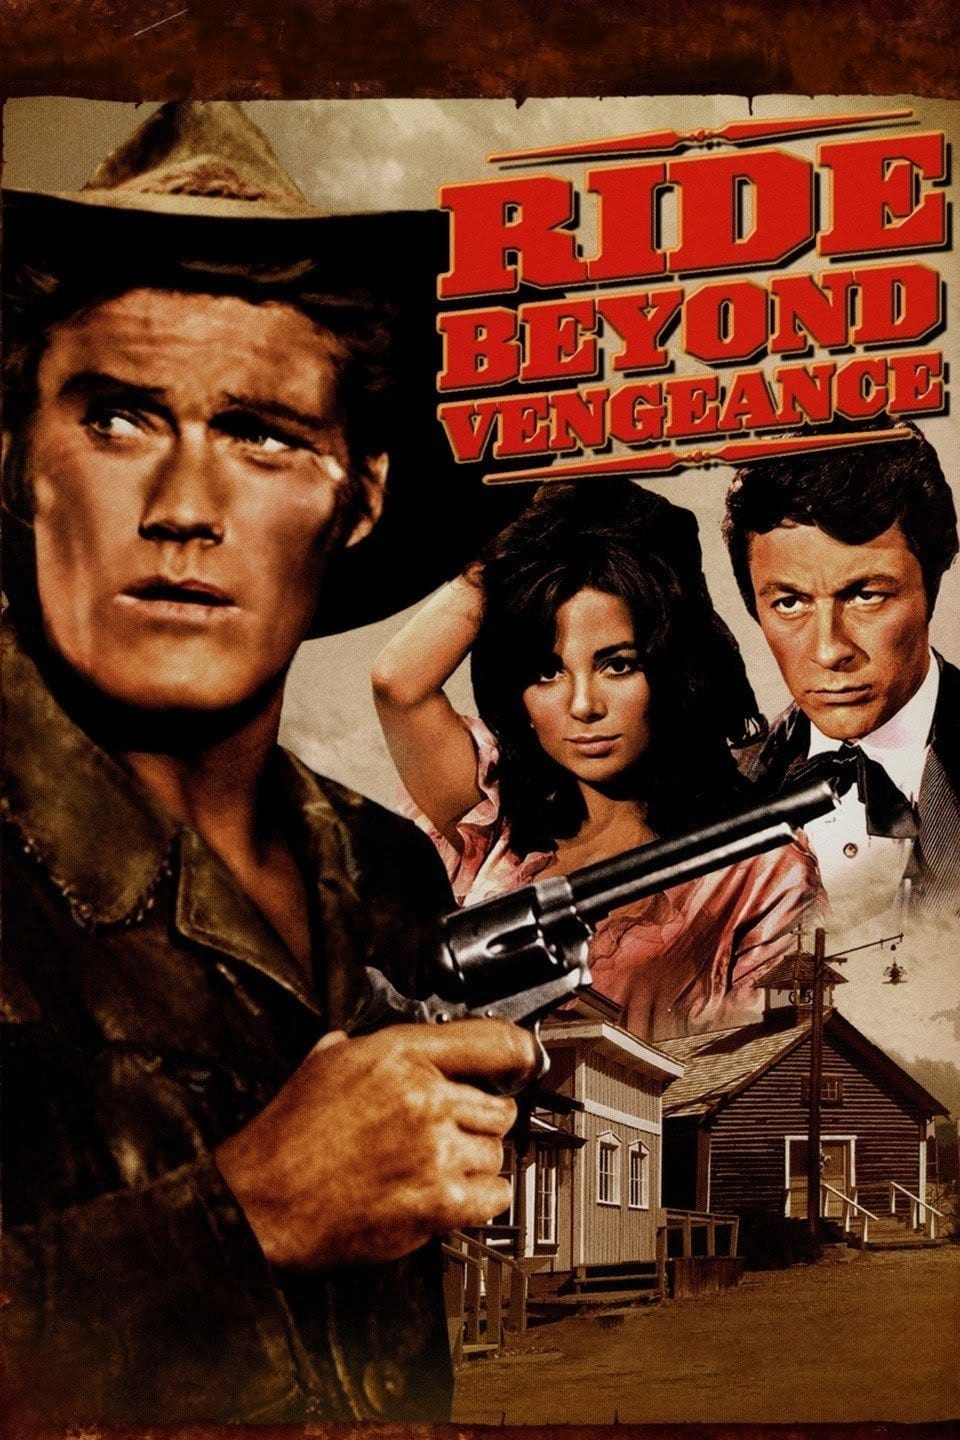 Ride Beyond Vengeance (1966)